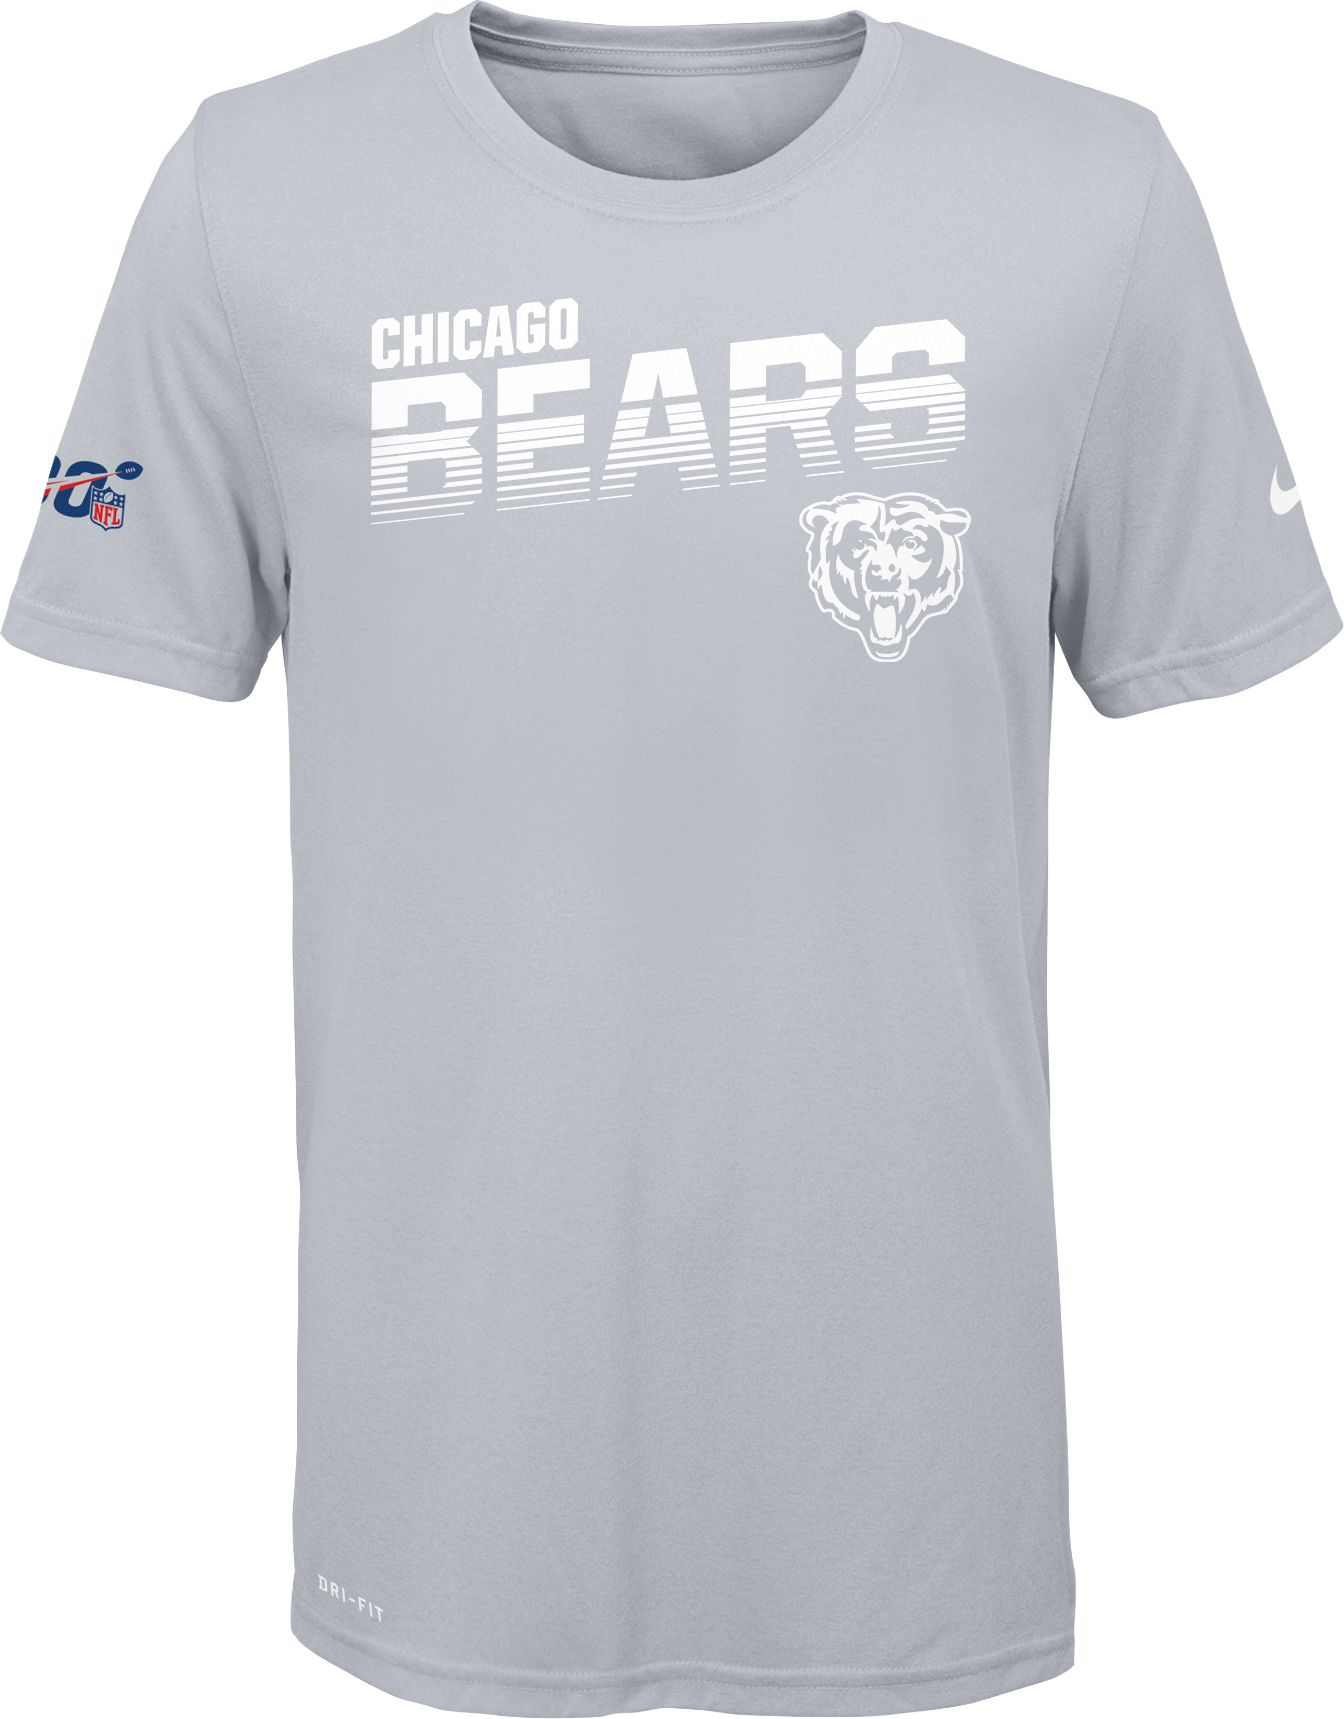 youth chicago bears shirt